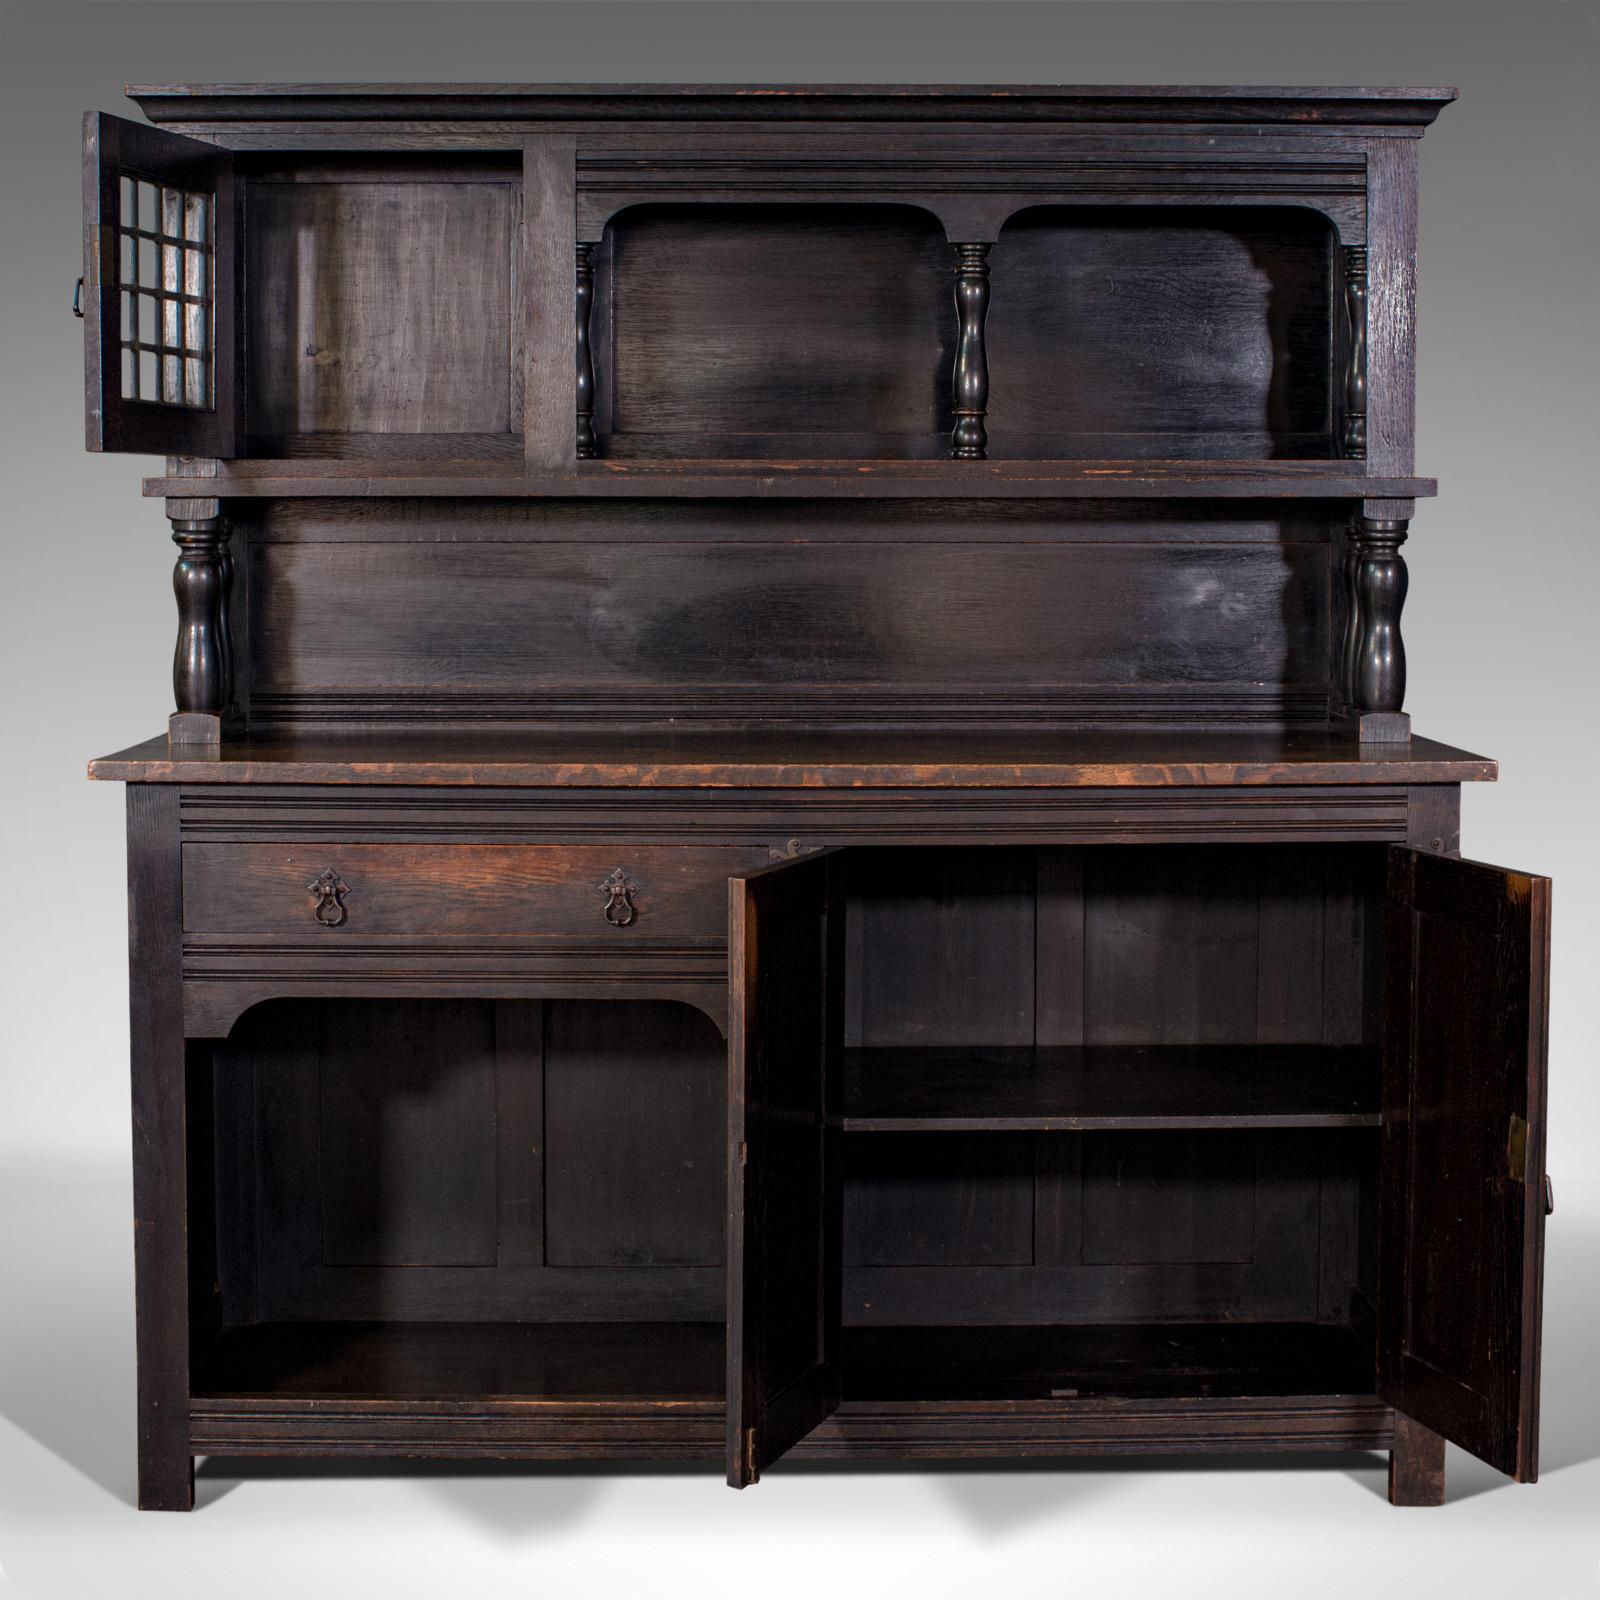 British Large Antique Housekeeper's Cabinet, Dresser, Arts & Crafts, After Liberty, 1910